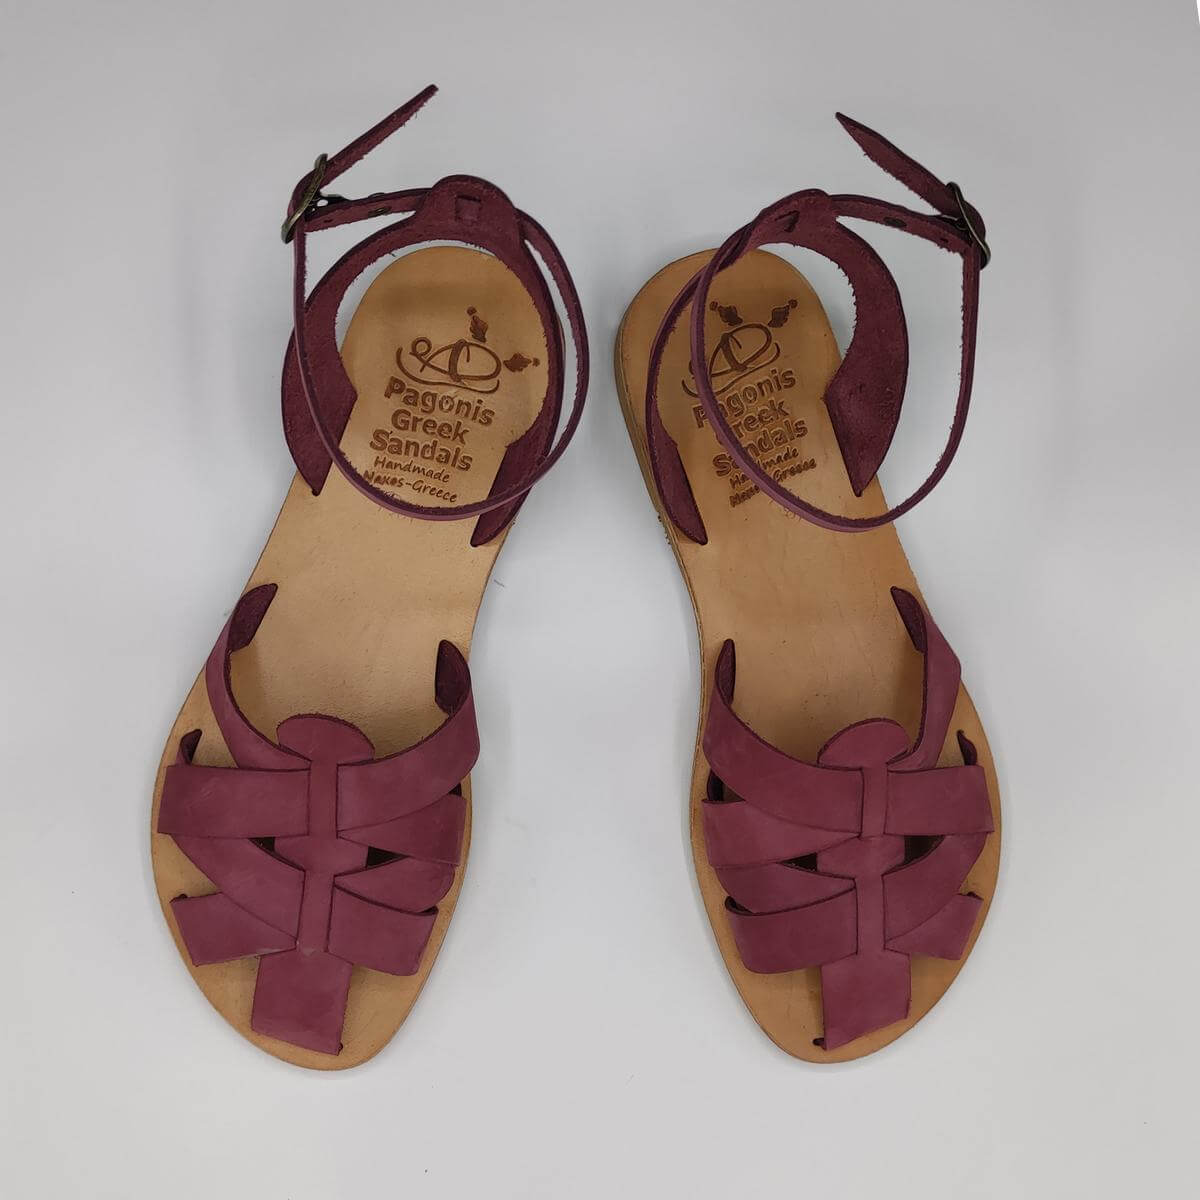 Lefkoni Closed toe leather sandal Purple Color